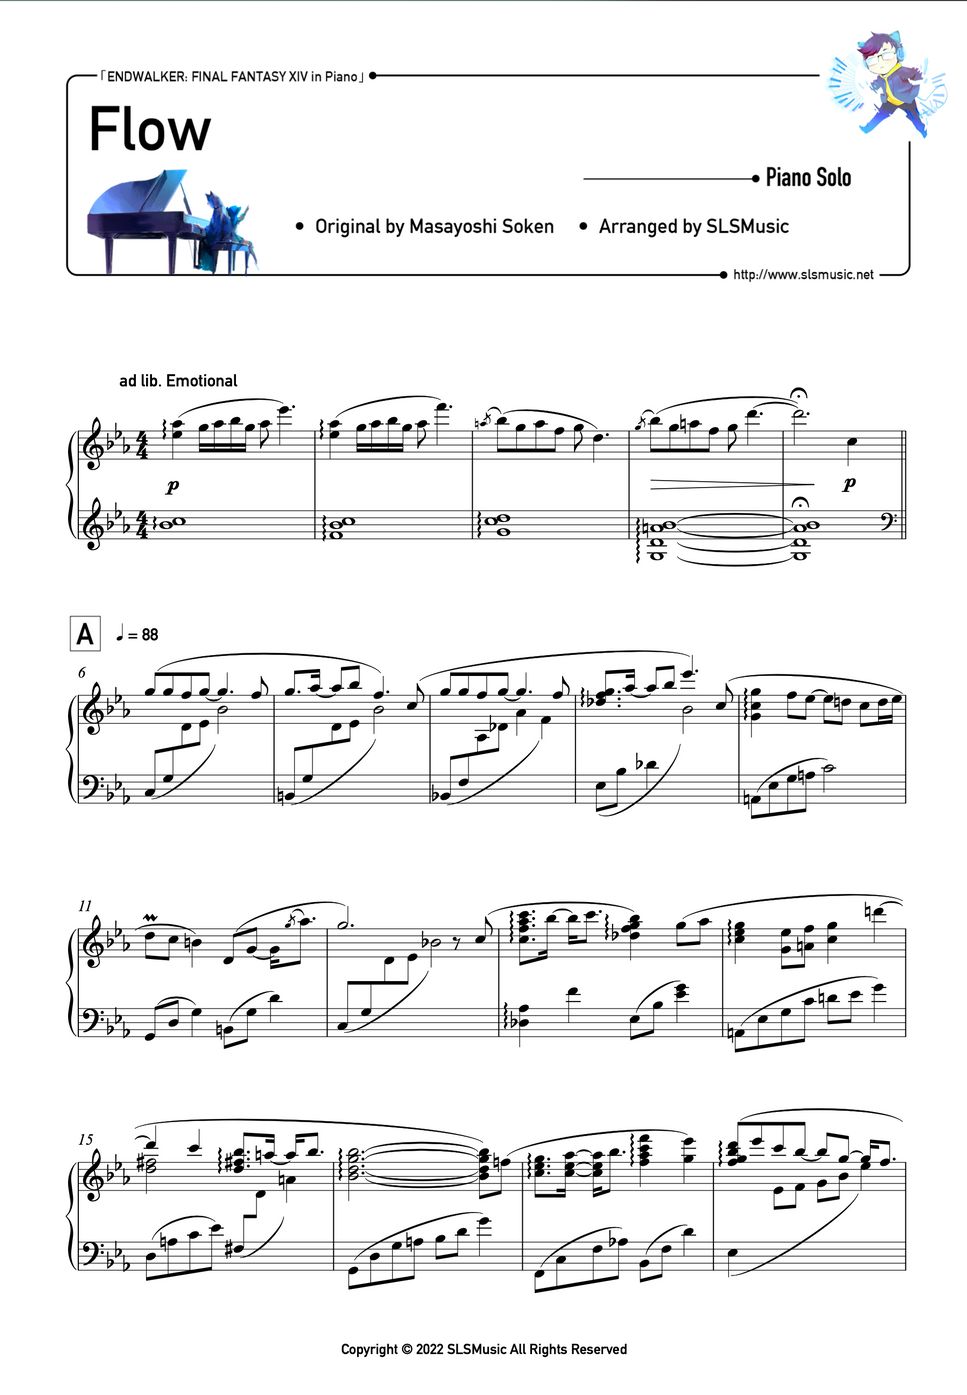 FINAL FANTASY XIV - ENDWALKER: FINAL FANTASY XIV in Piano (Masayoshi Soken)  楽譜 by SLSMusic